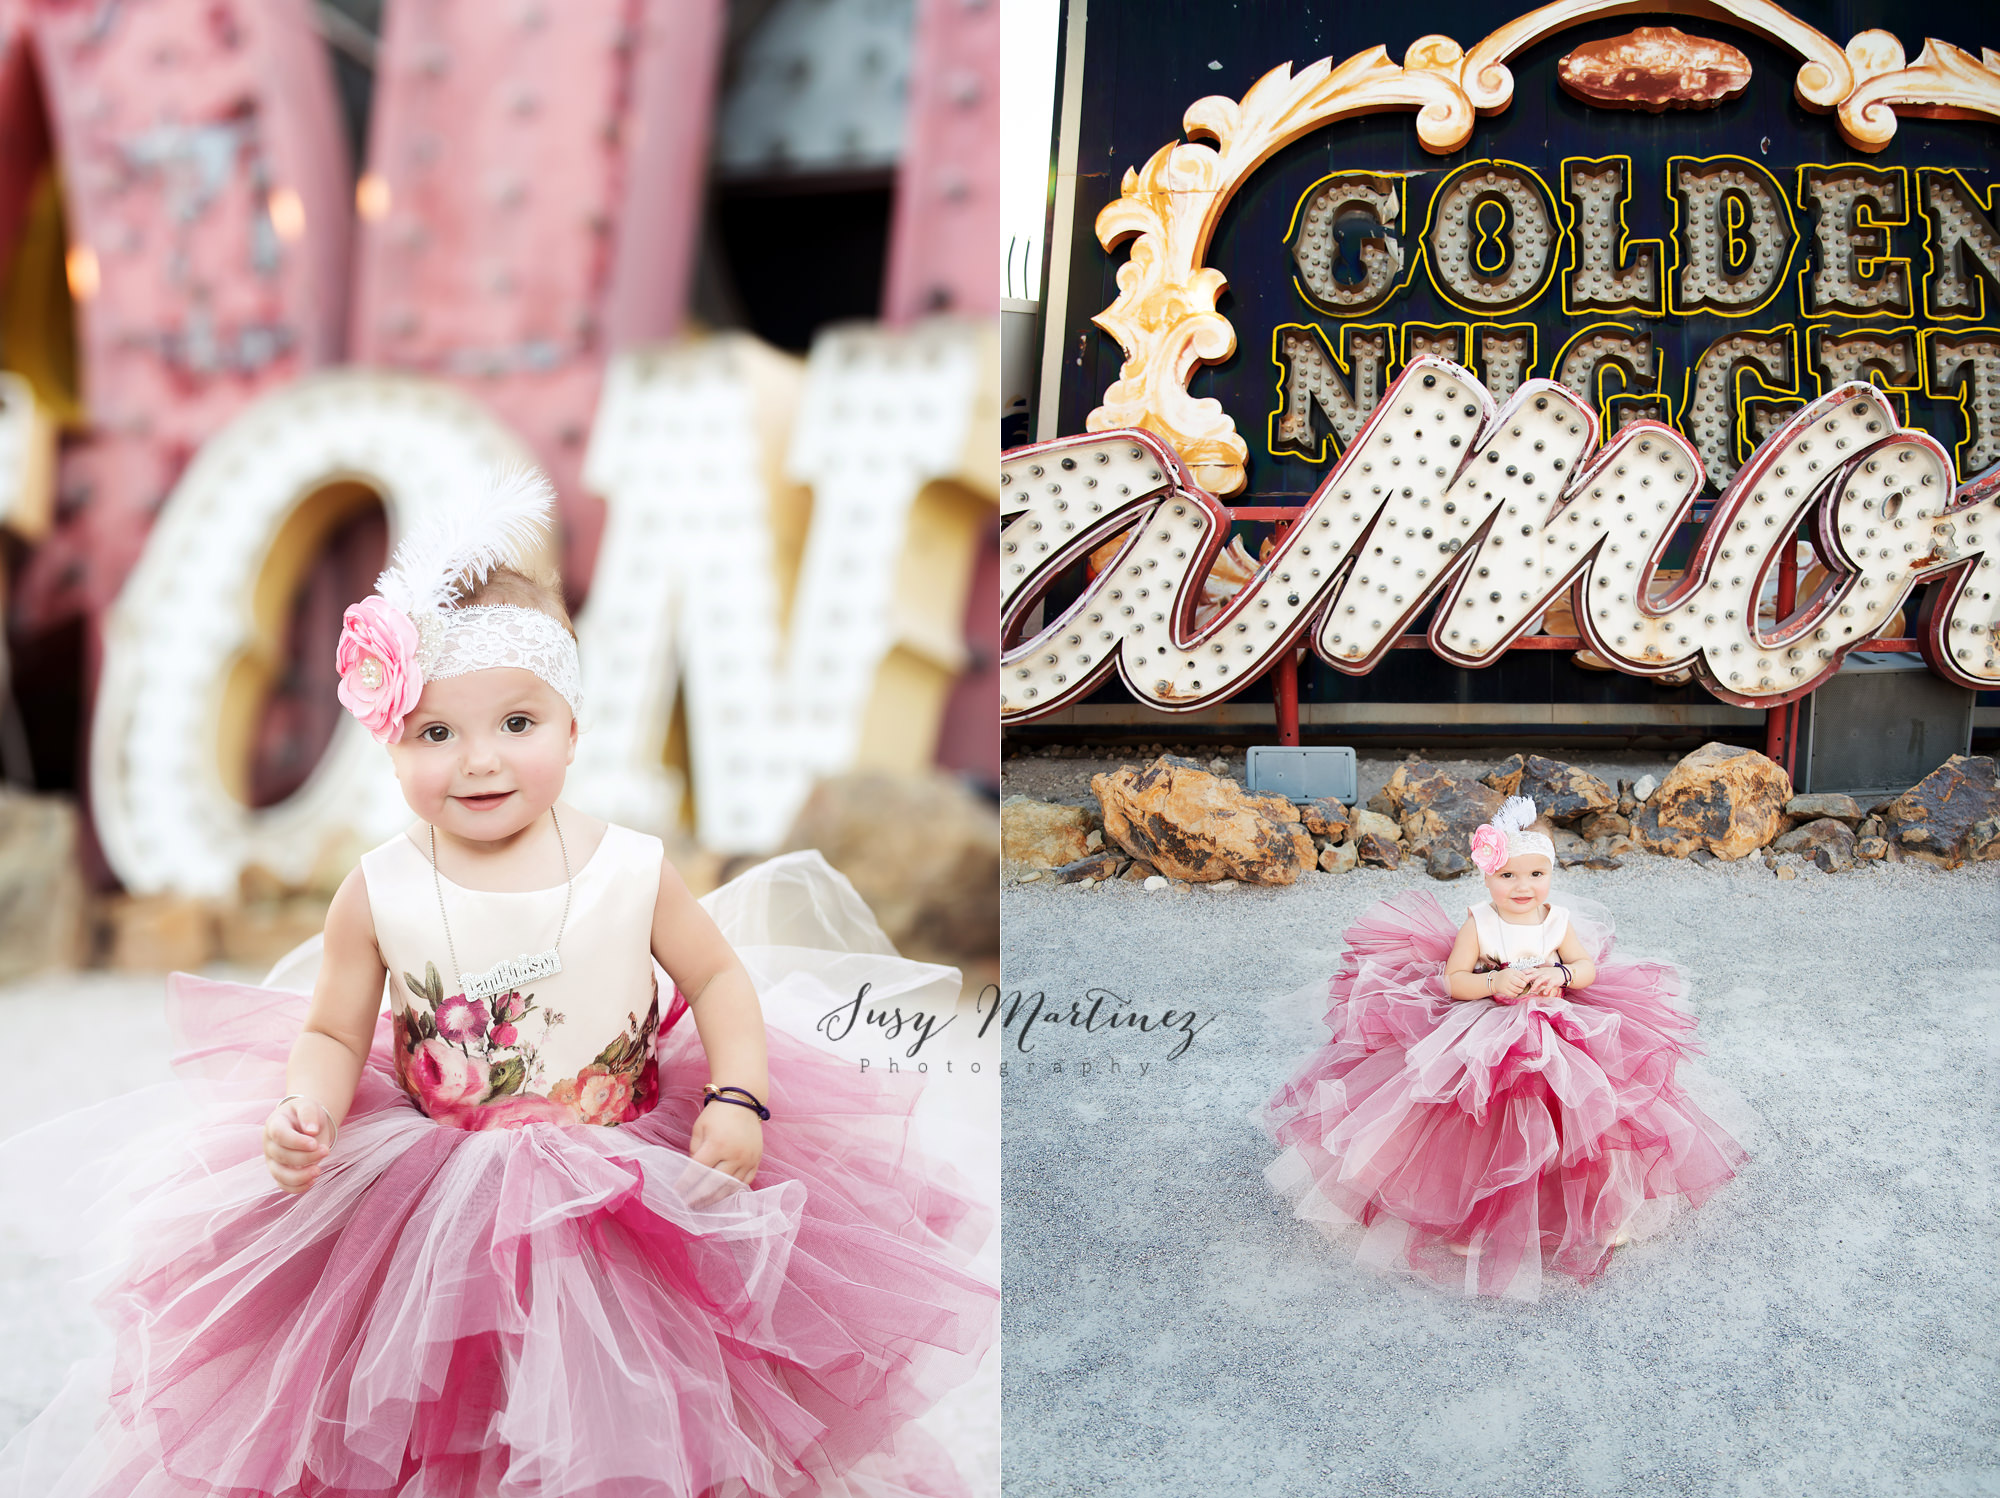 18 month old in Doll Cake dress poses in Neon Boneyard